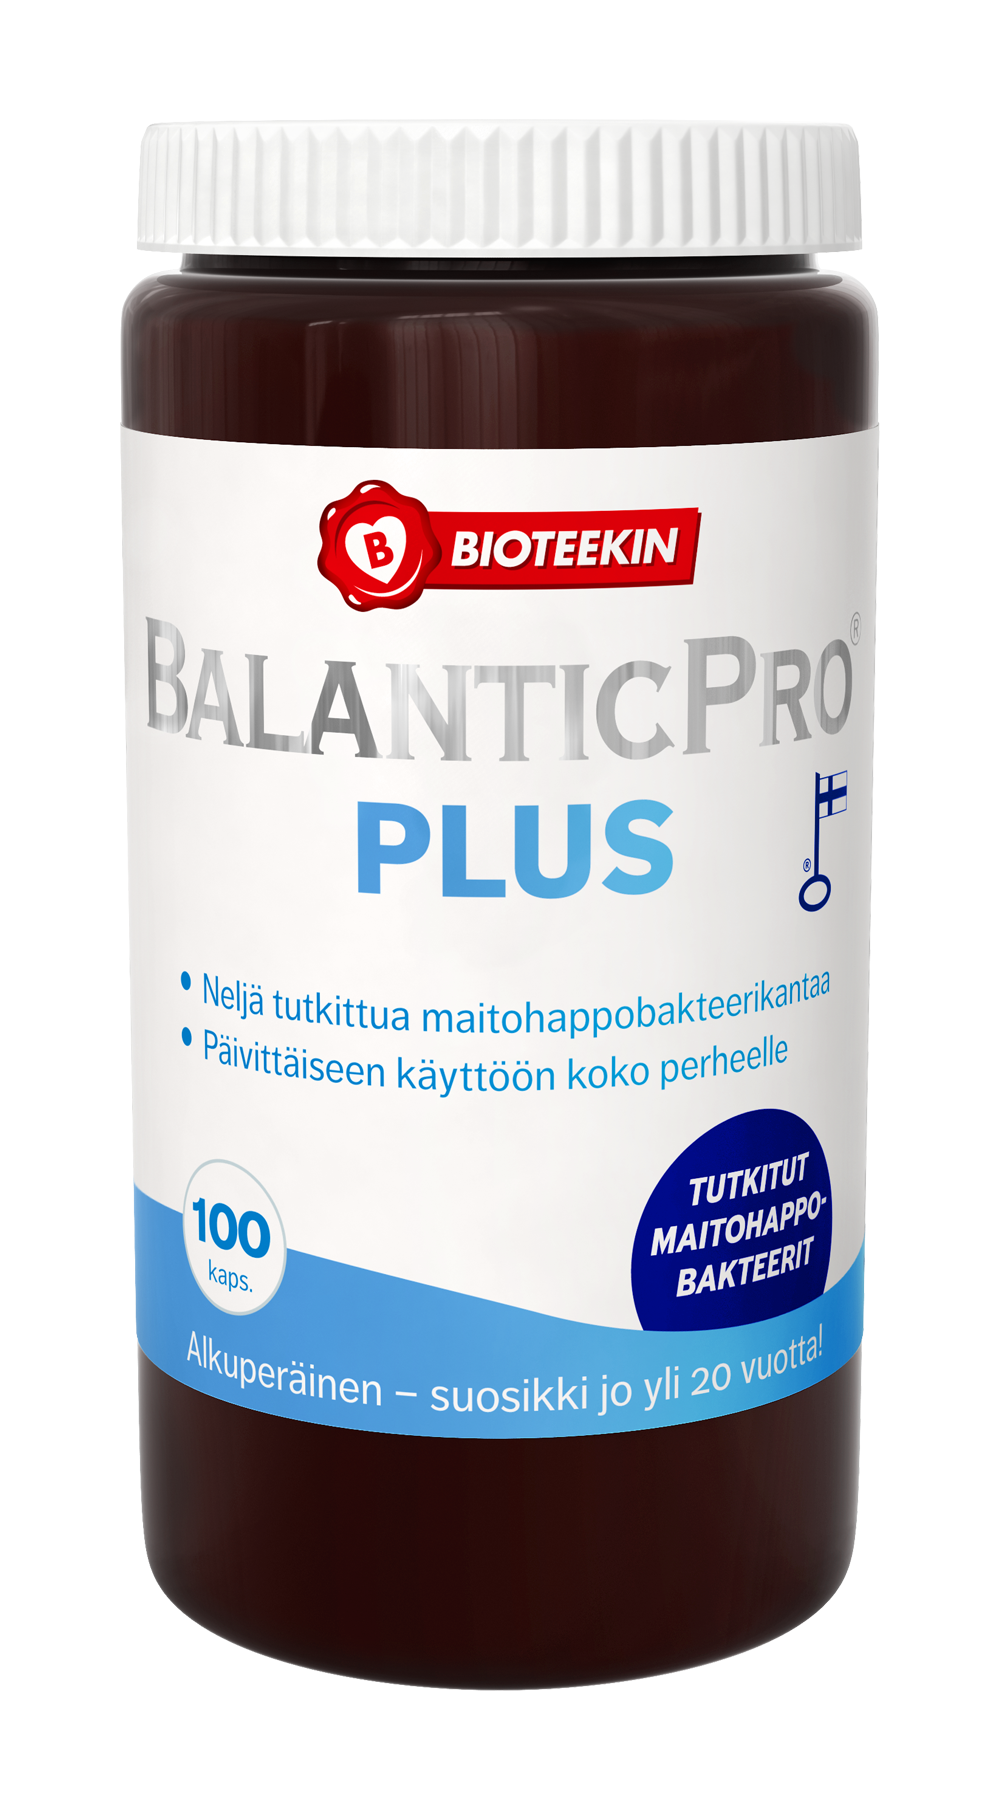 Bioteekin BalanticPro Plus - Maitohappobakteeri 100 kaps.